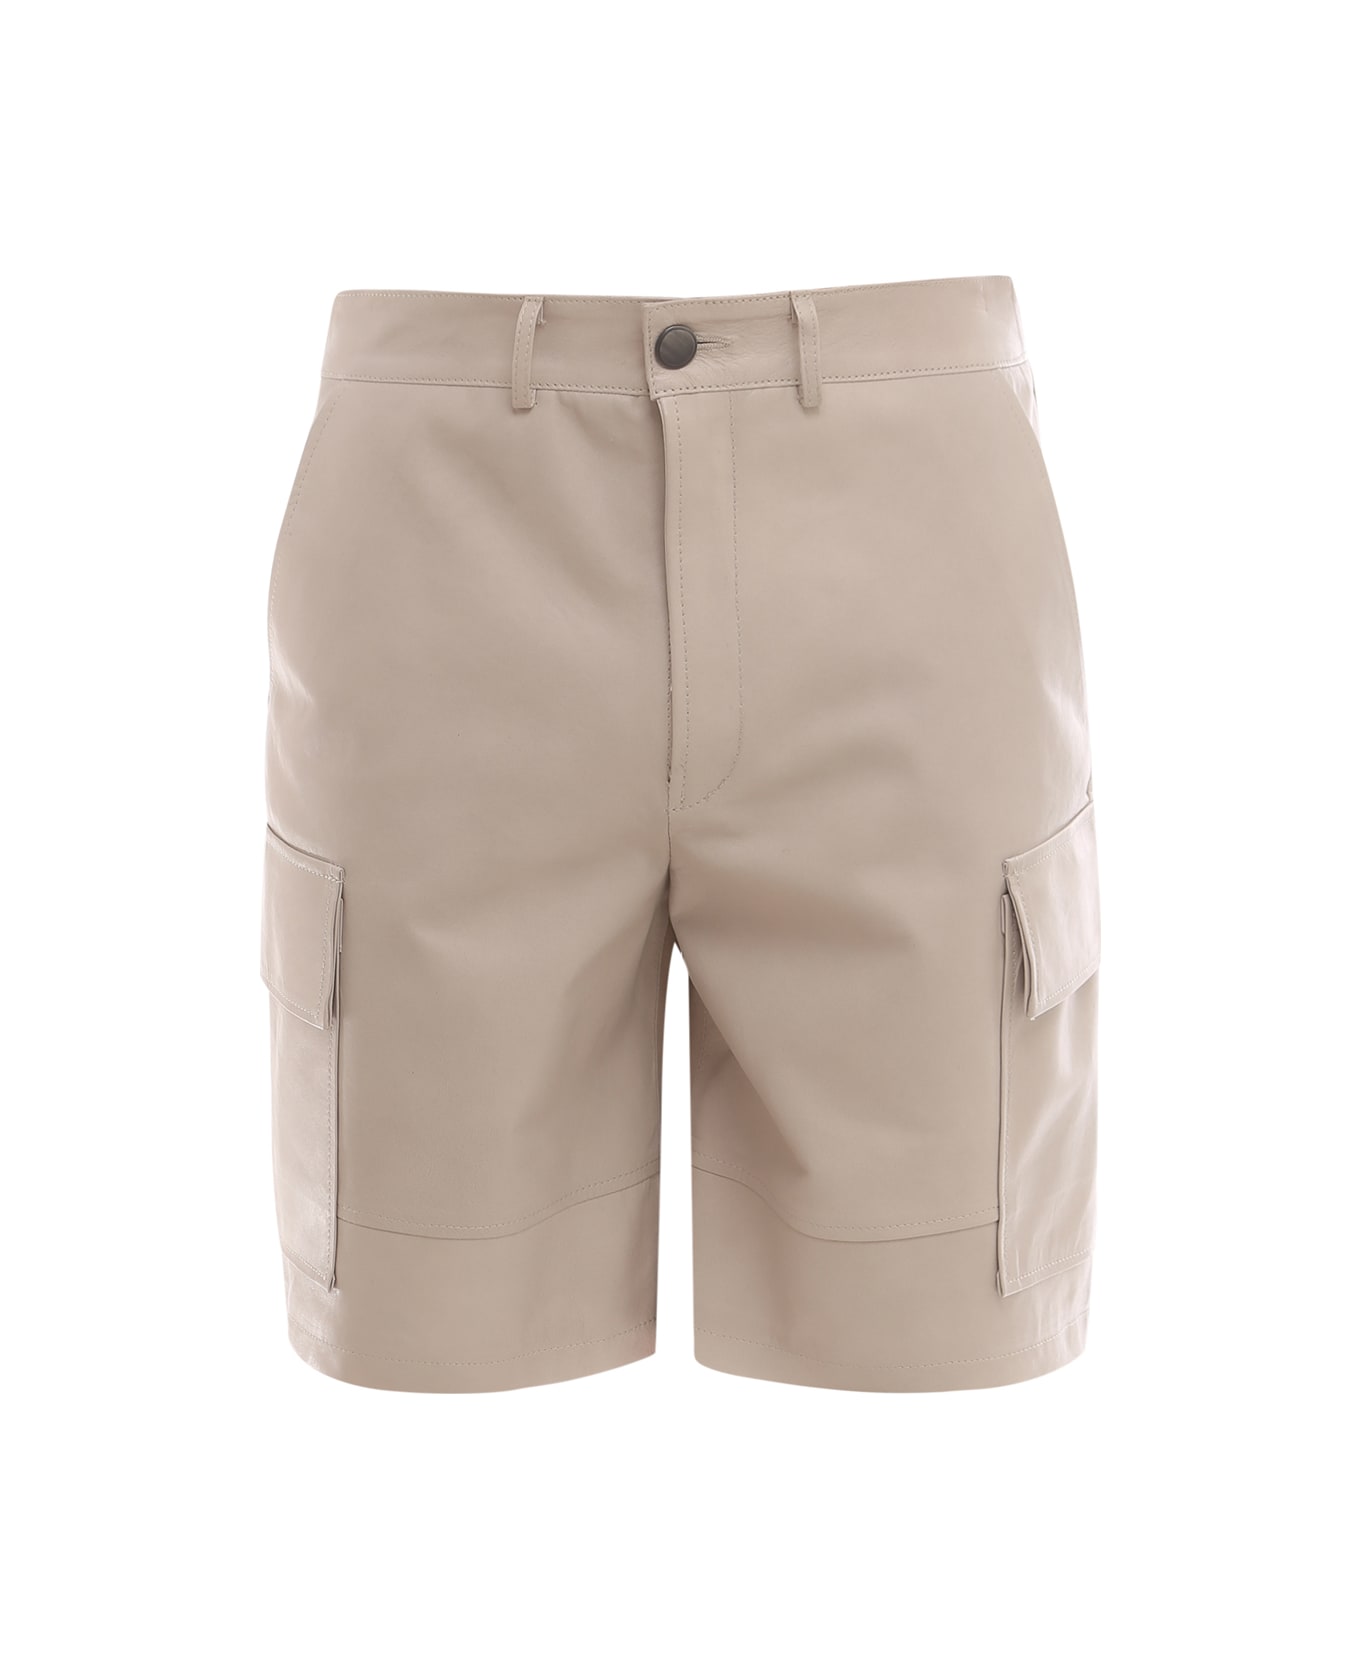 DFour Bermuda Shorts - Beige ショートパンツ